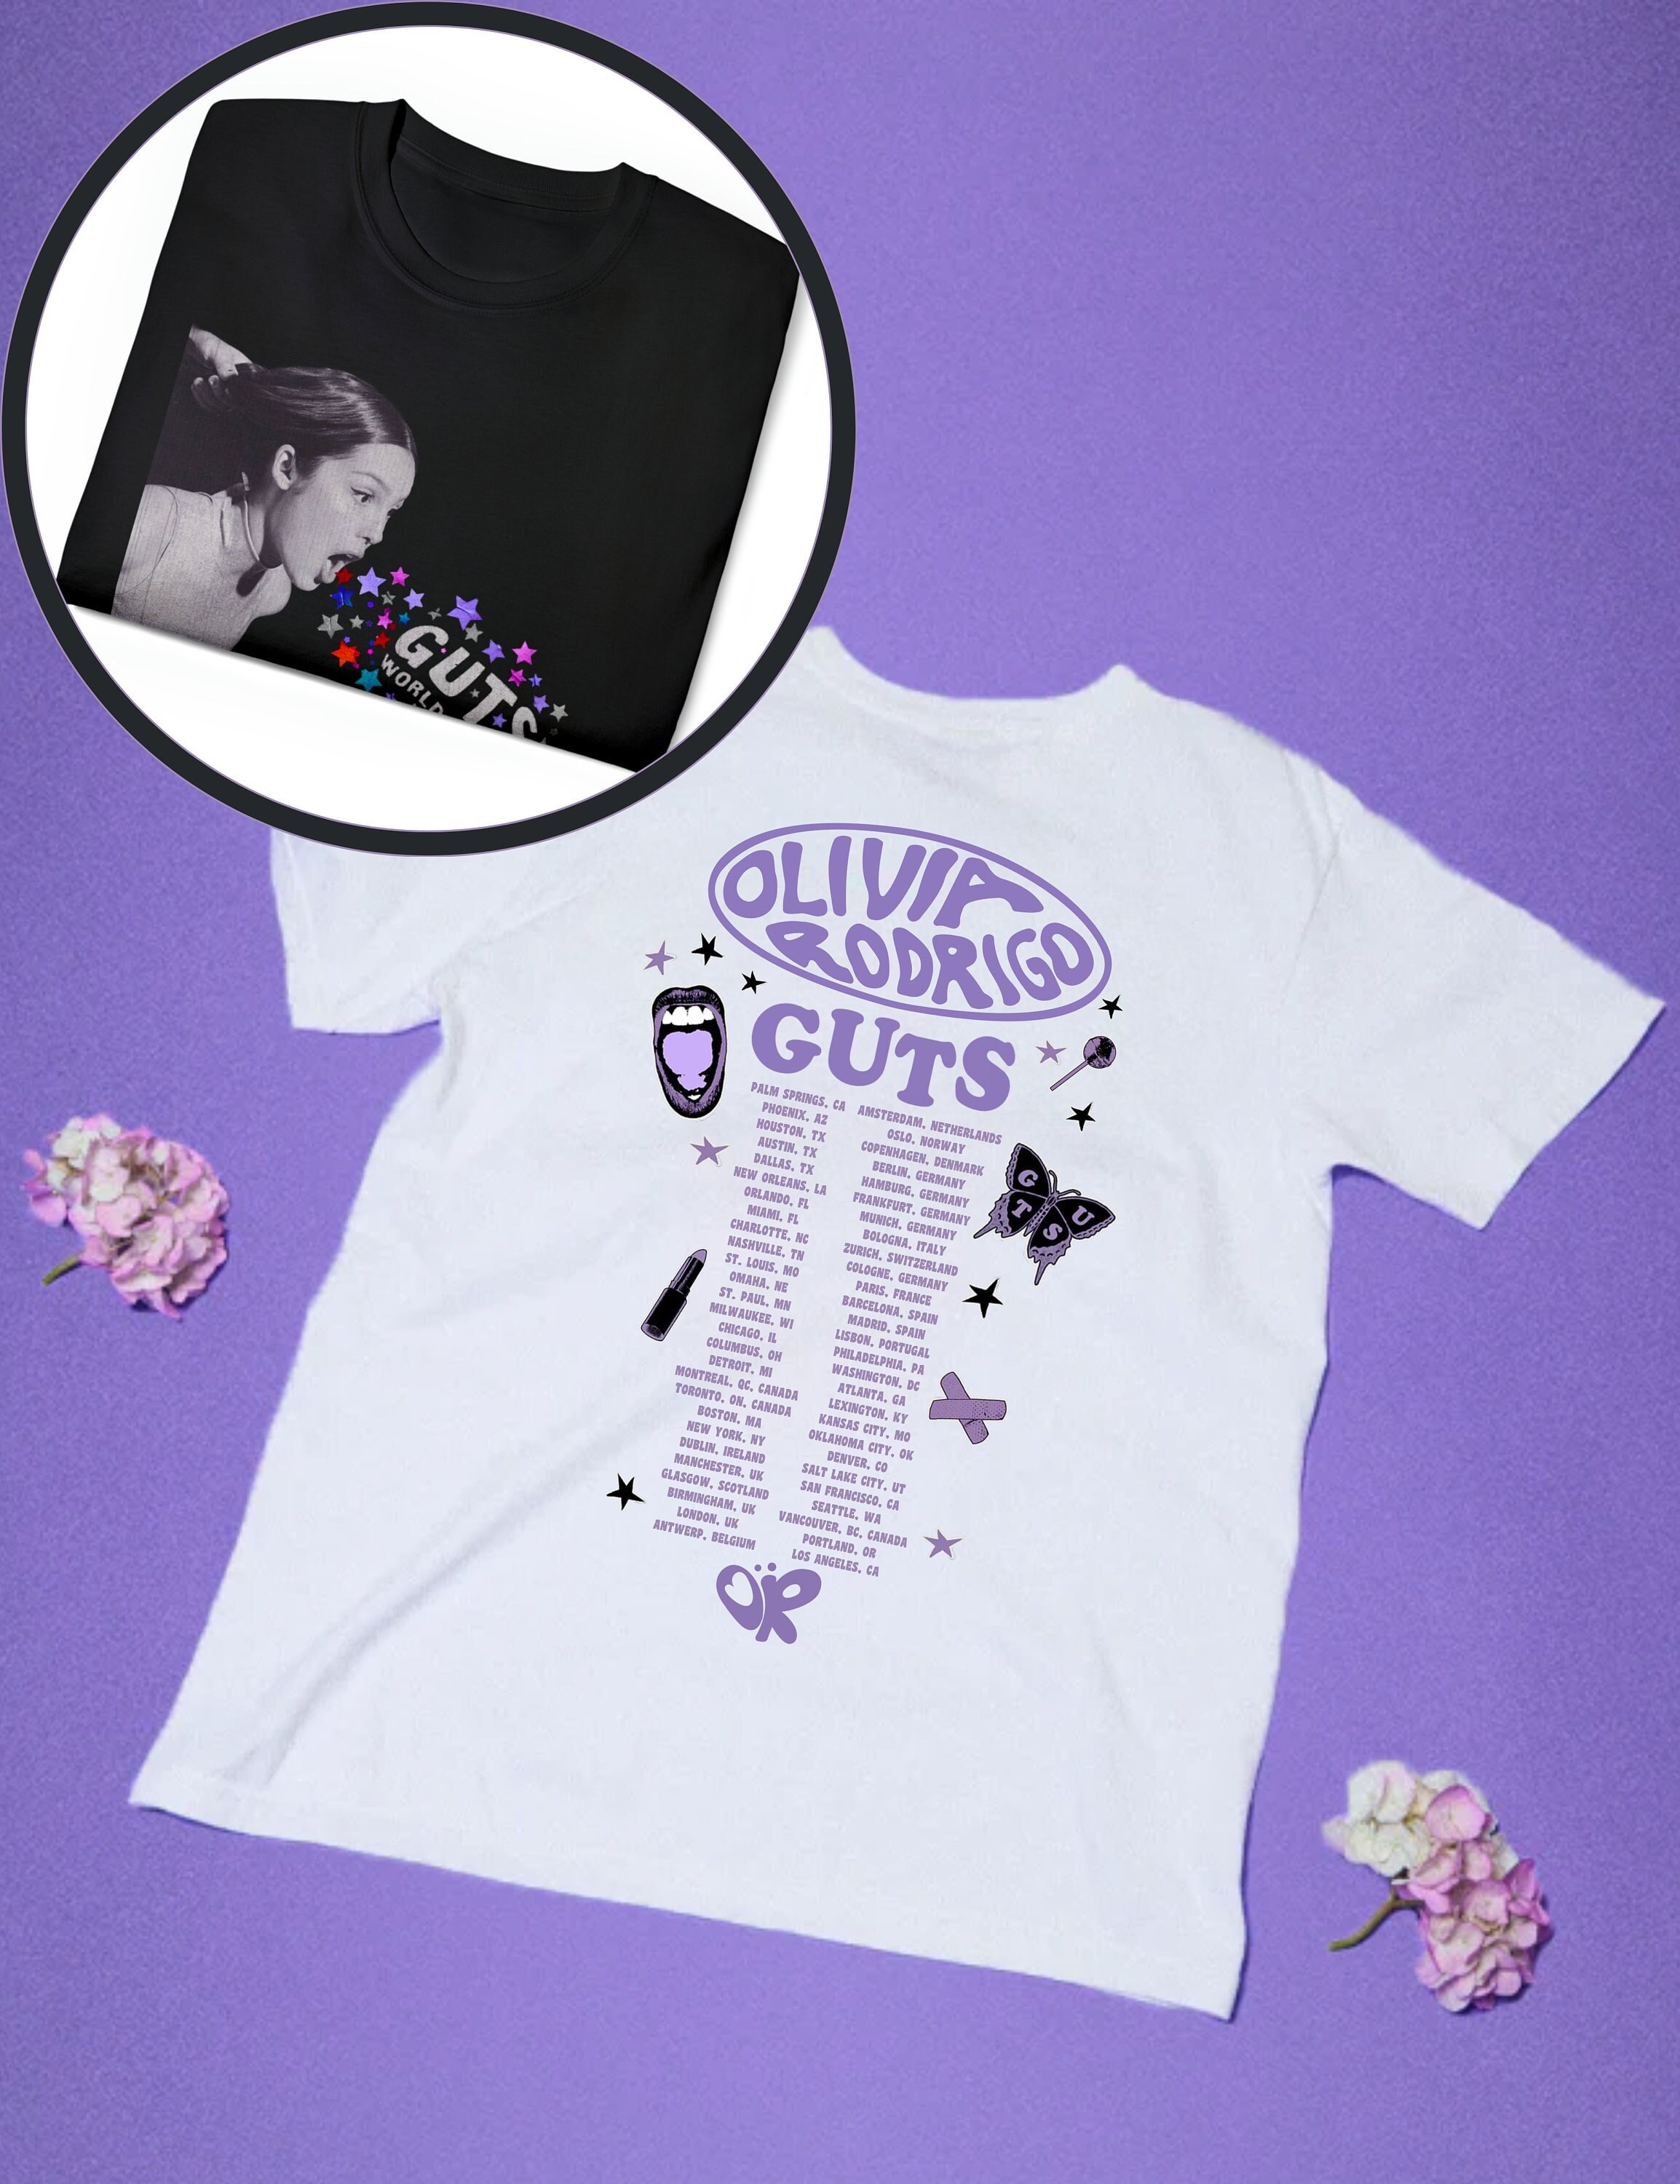 GUTS Tour Shirt, Olivia Rodrigo Merch, Album Tracklist Tee